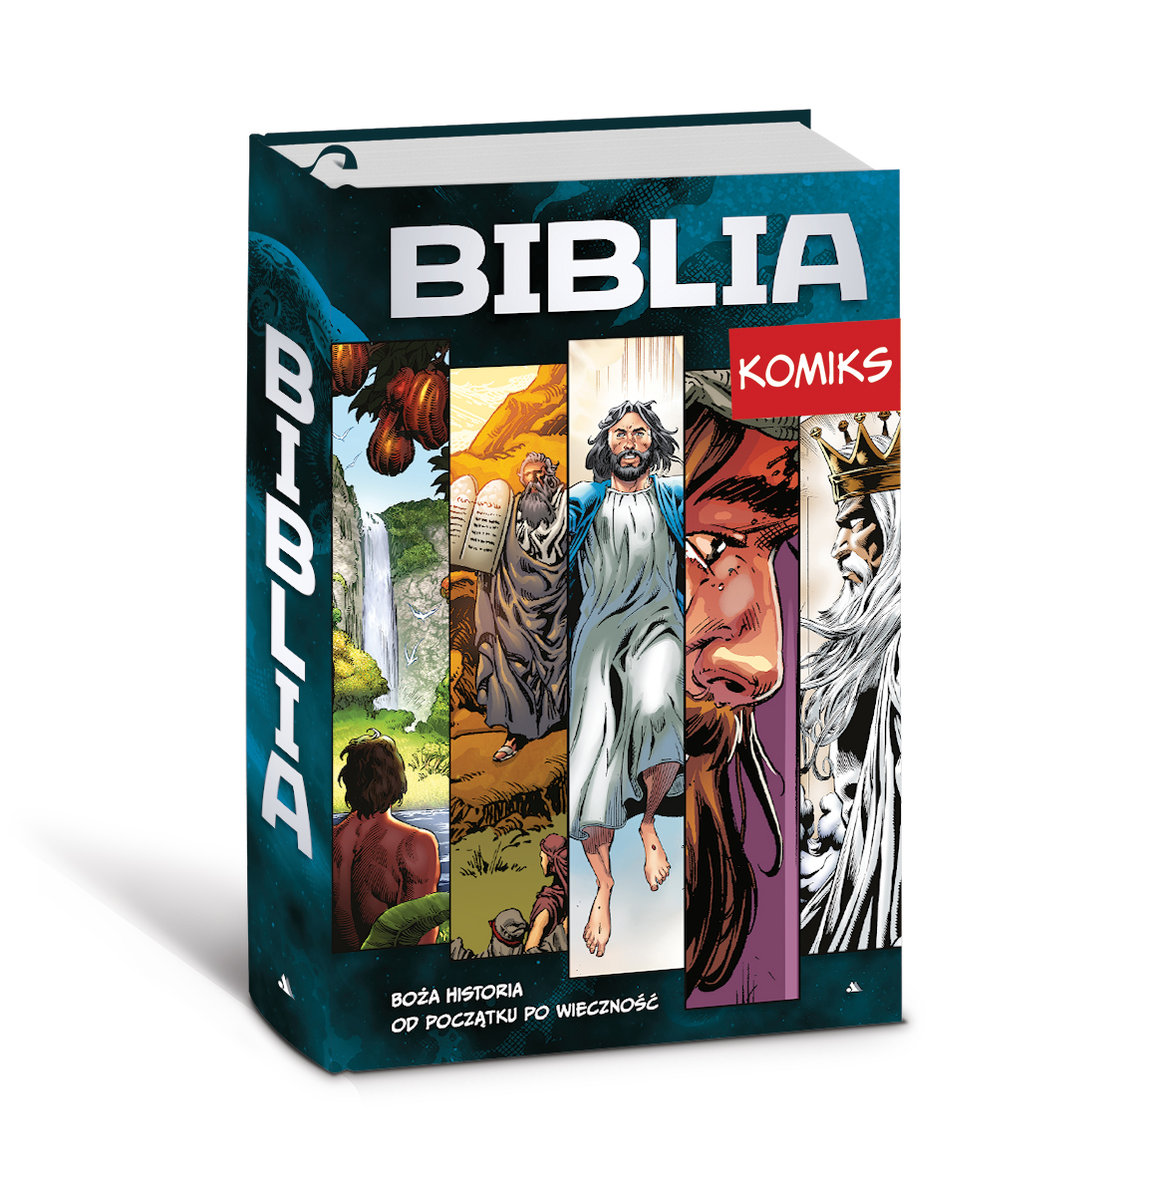 Biblia w komiksie cover